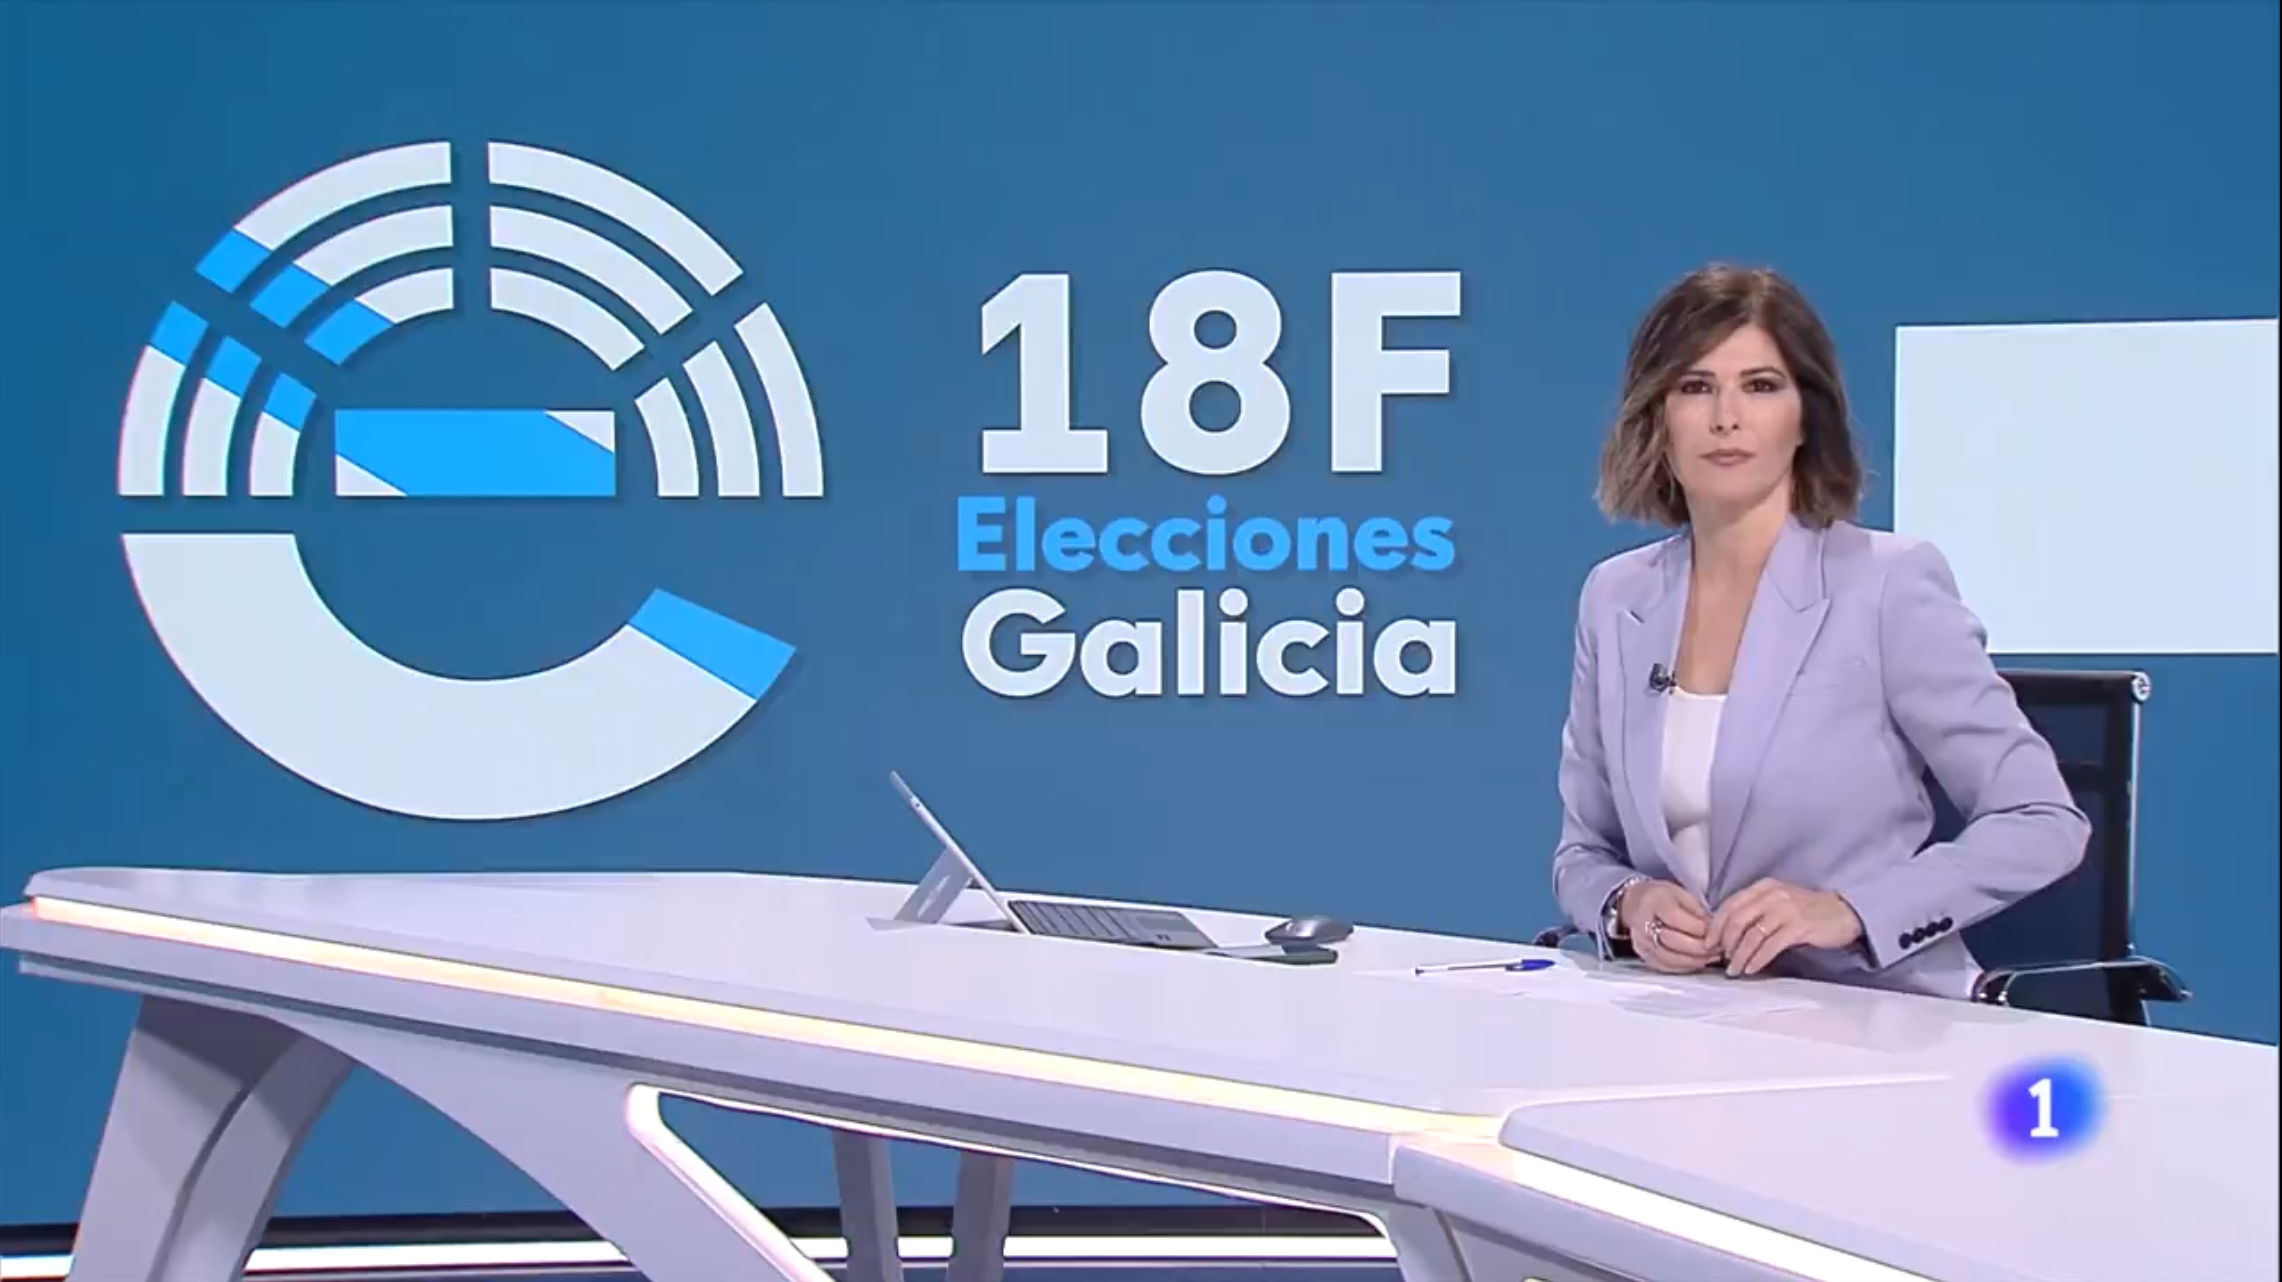 Un consejero de RTVE emite un demoledor informe sobre la censura de TVE a la candidata de Podemos Galicia